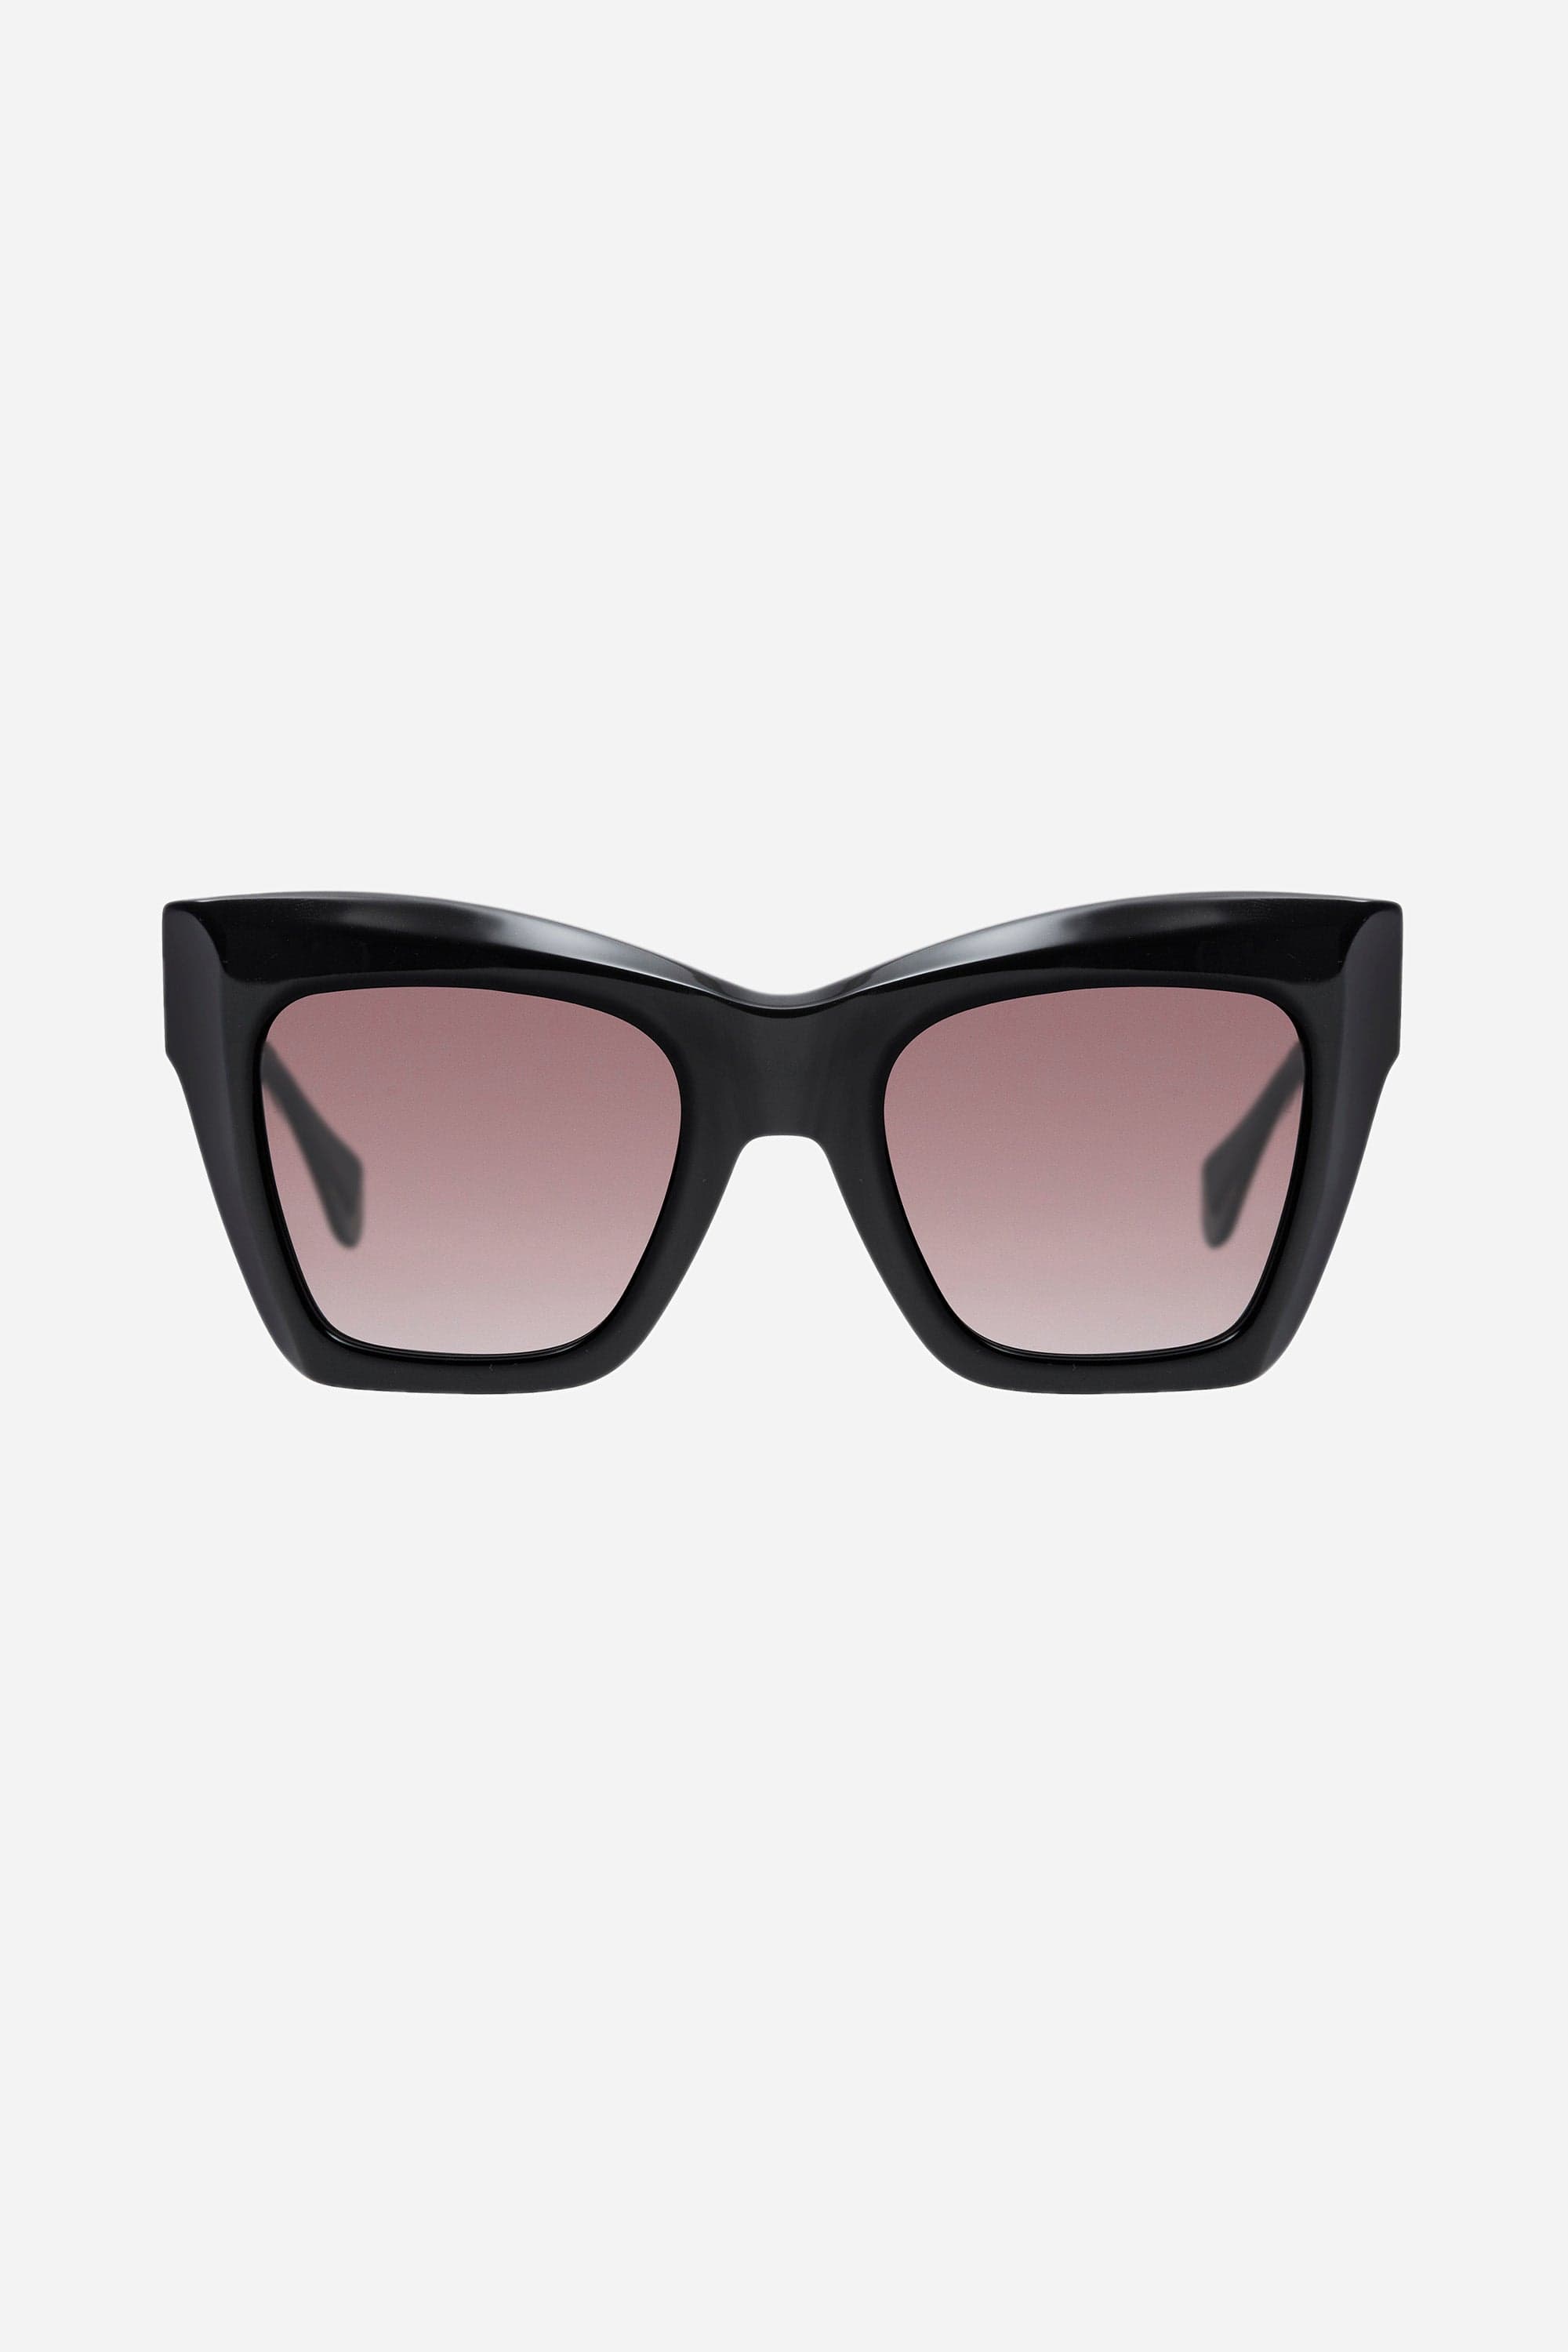 Gigi Studios cat eye black sunglasses - Eyewear Club